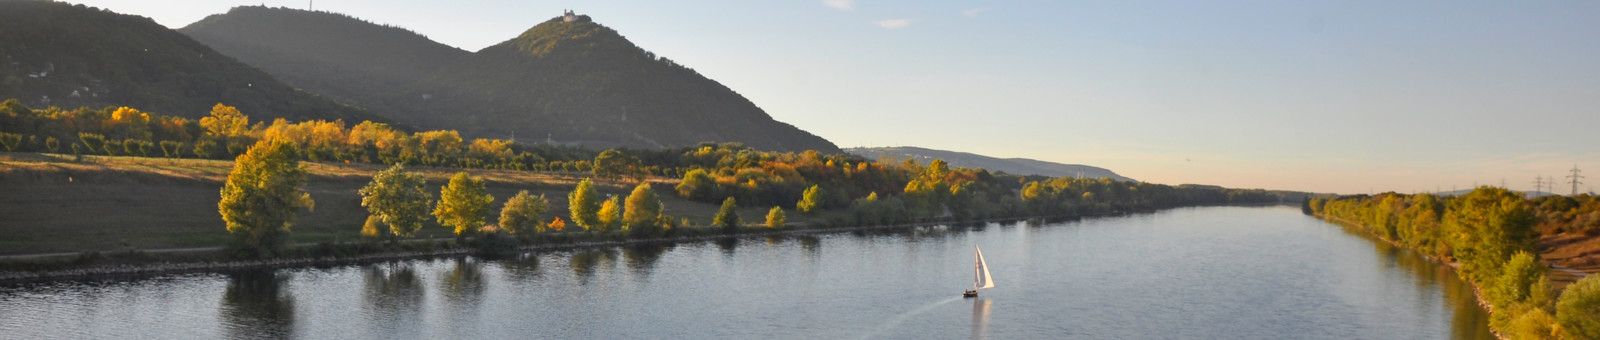     Nova Donava s hriboma Kahlenberg in Leopoldsberg 